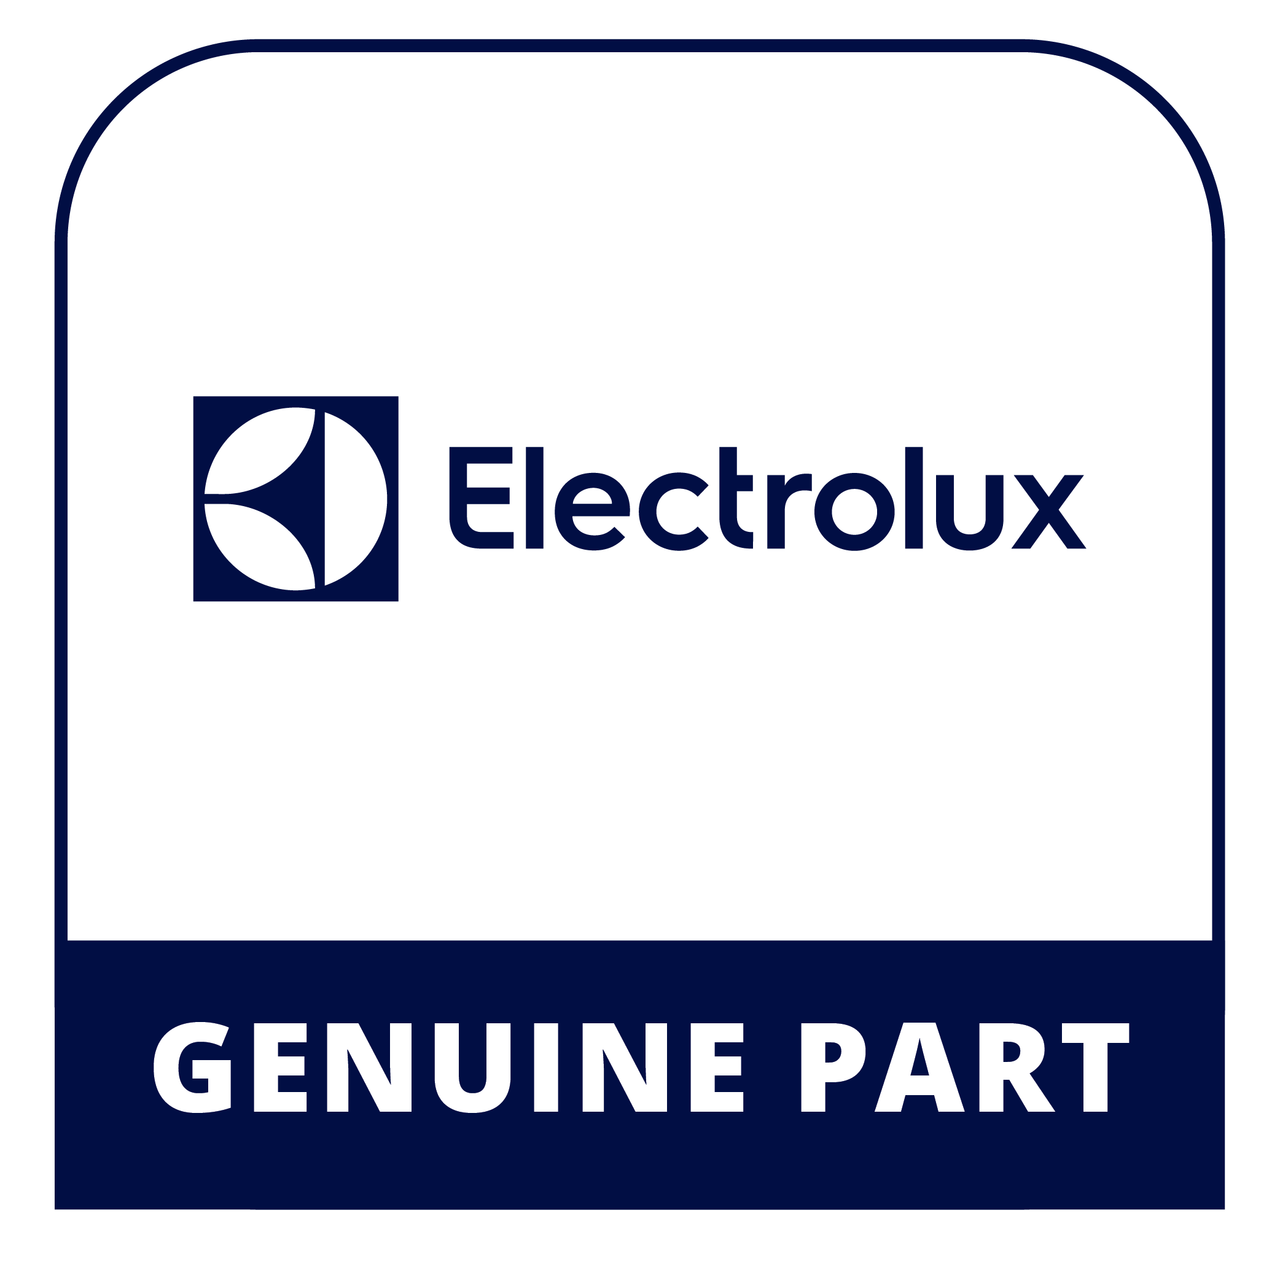 Frigidaire - Electrolux 152122010 Holder - Genuine Electrolux Part